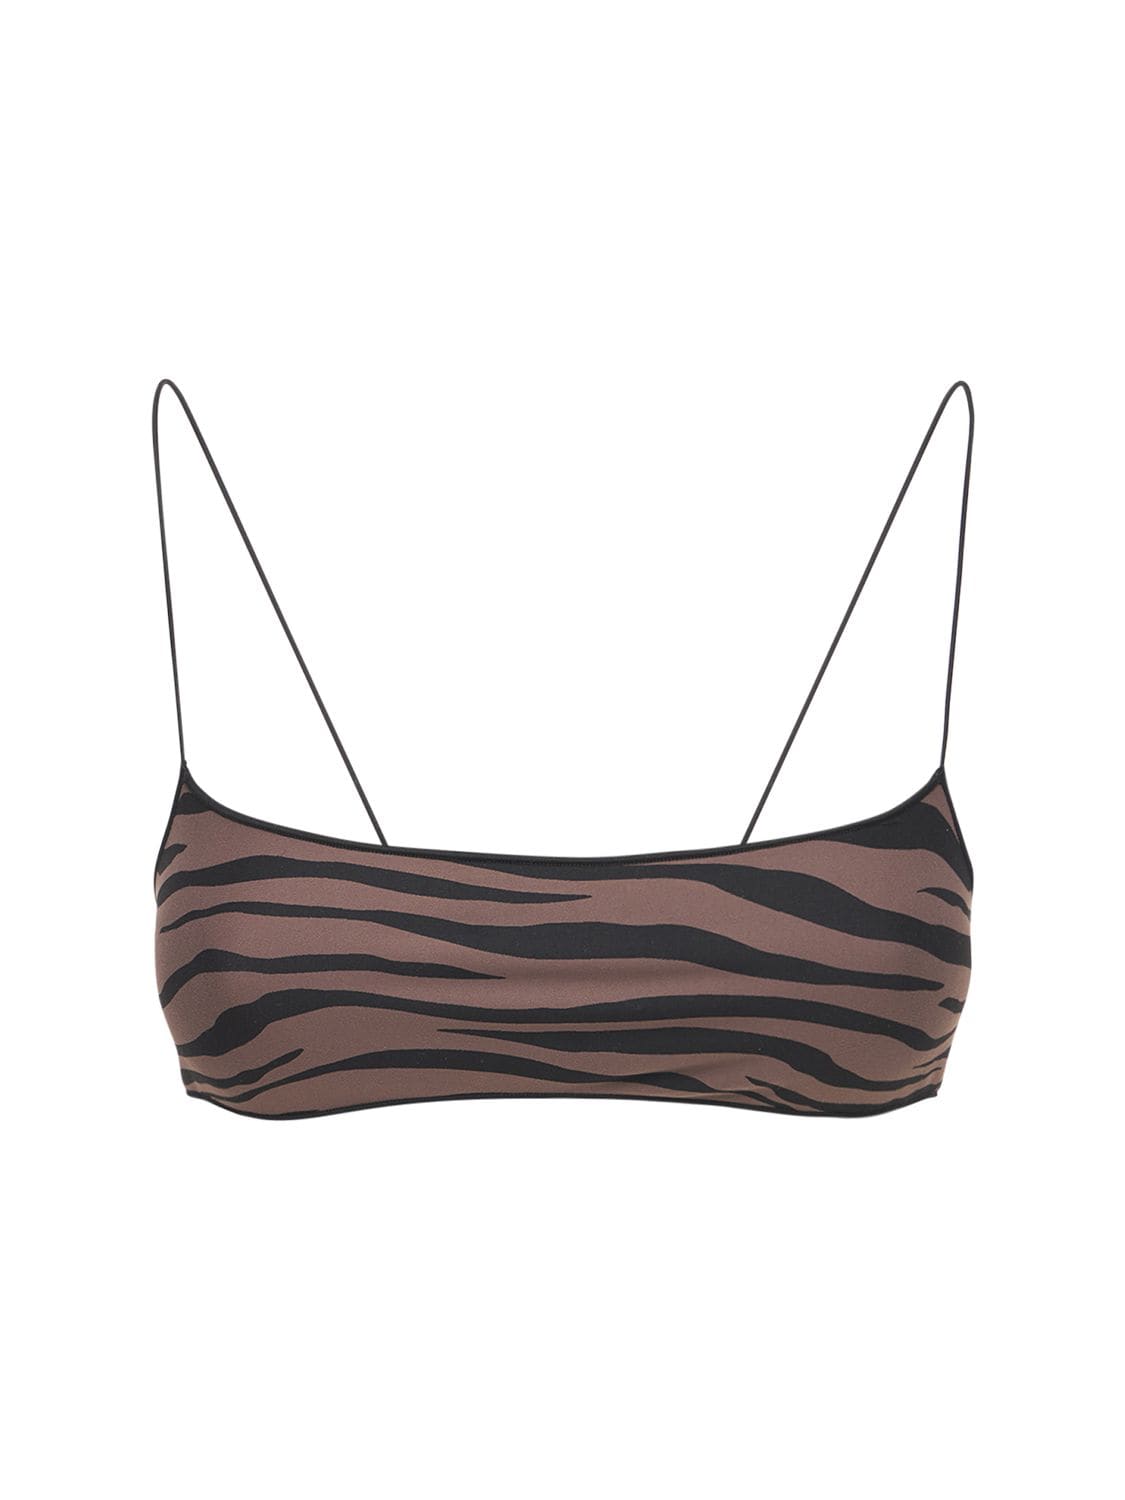 Image of C Bralette Printed Bikini Top